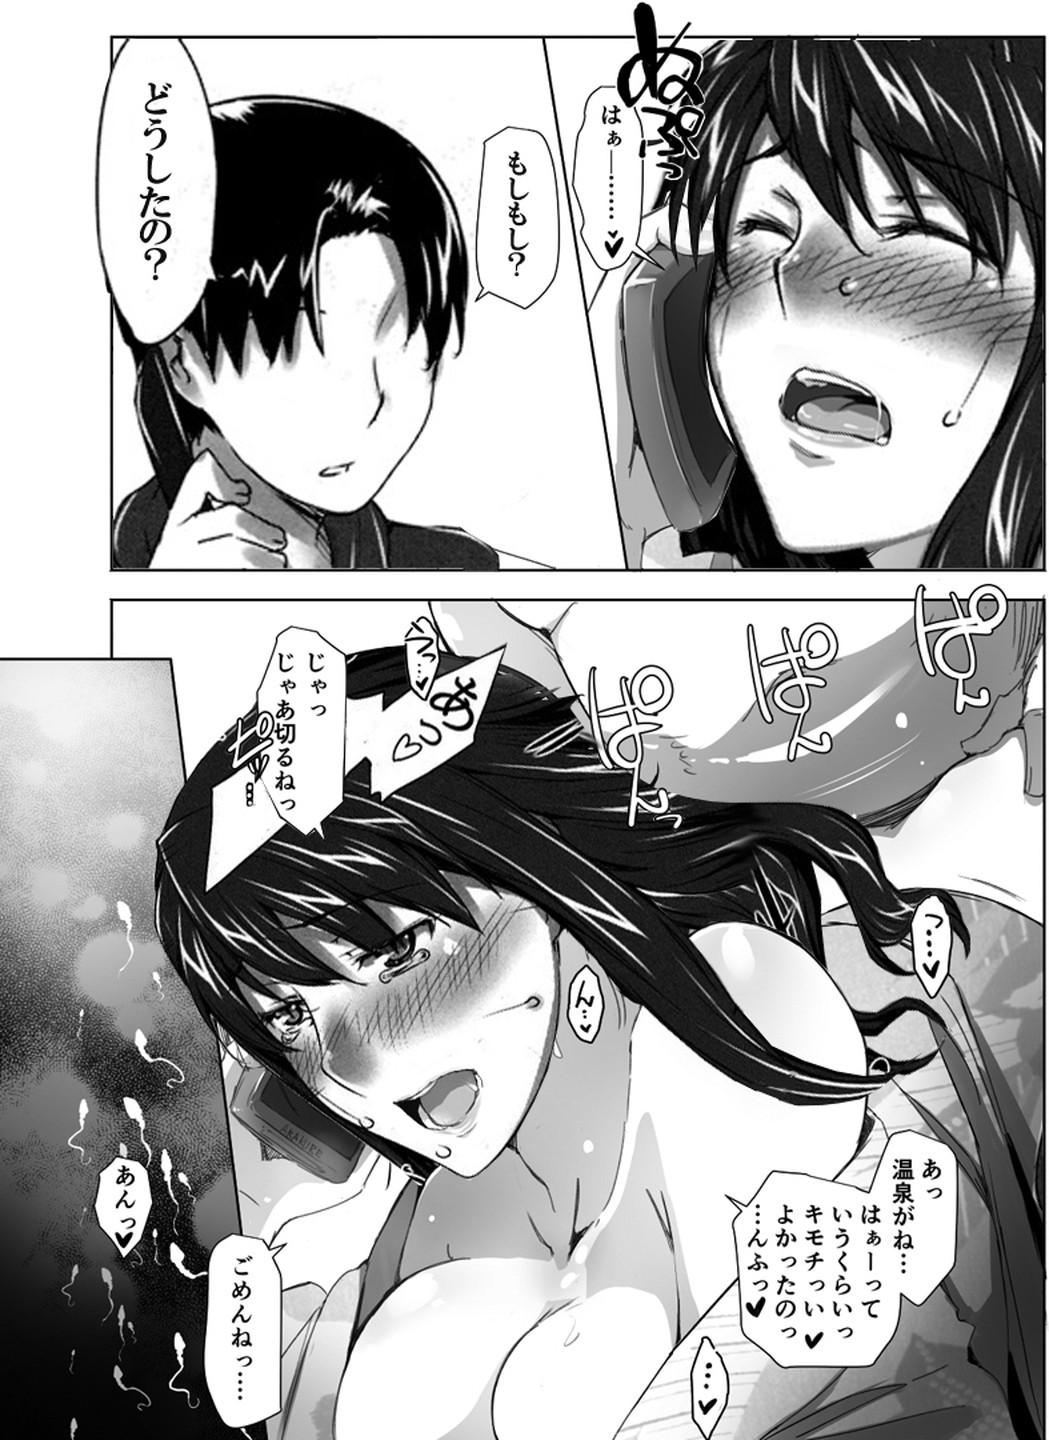 Sakiko-san in delusion Vol.1 Ver.1.1 ~Sakiko-san's circumstance at an educational training~ Stupid Sakiko (collage) on-going 24